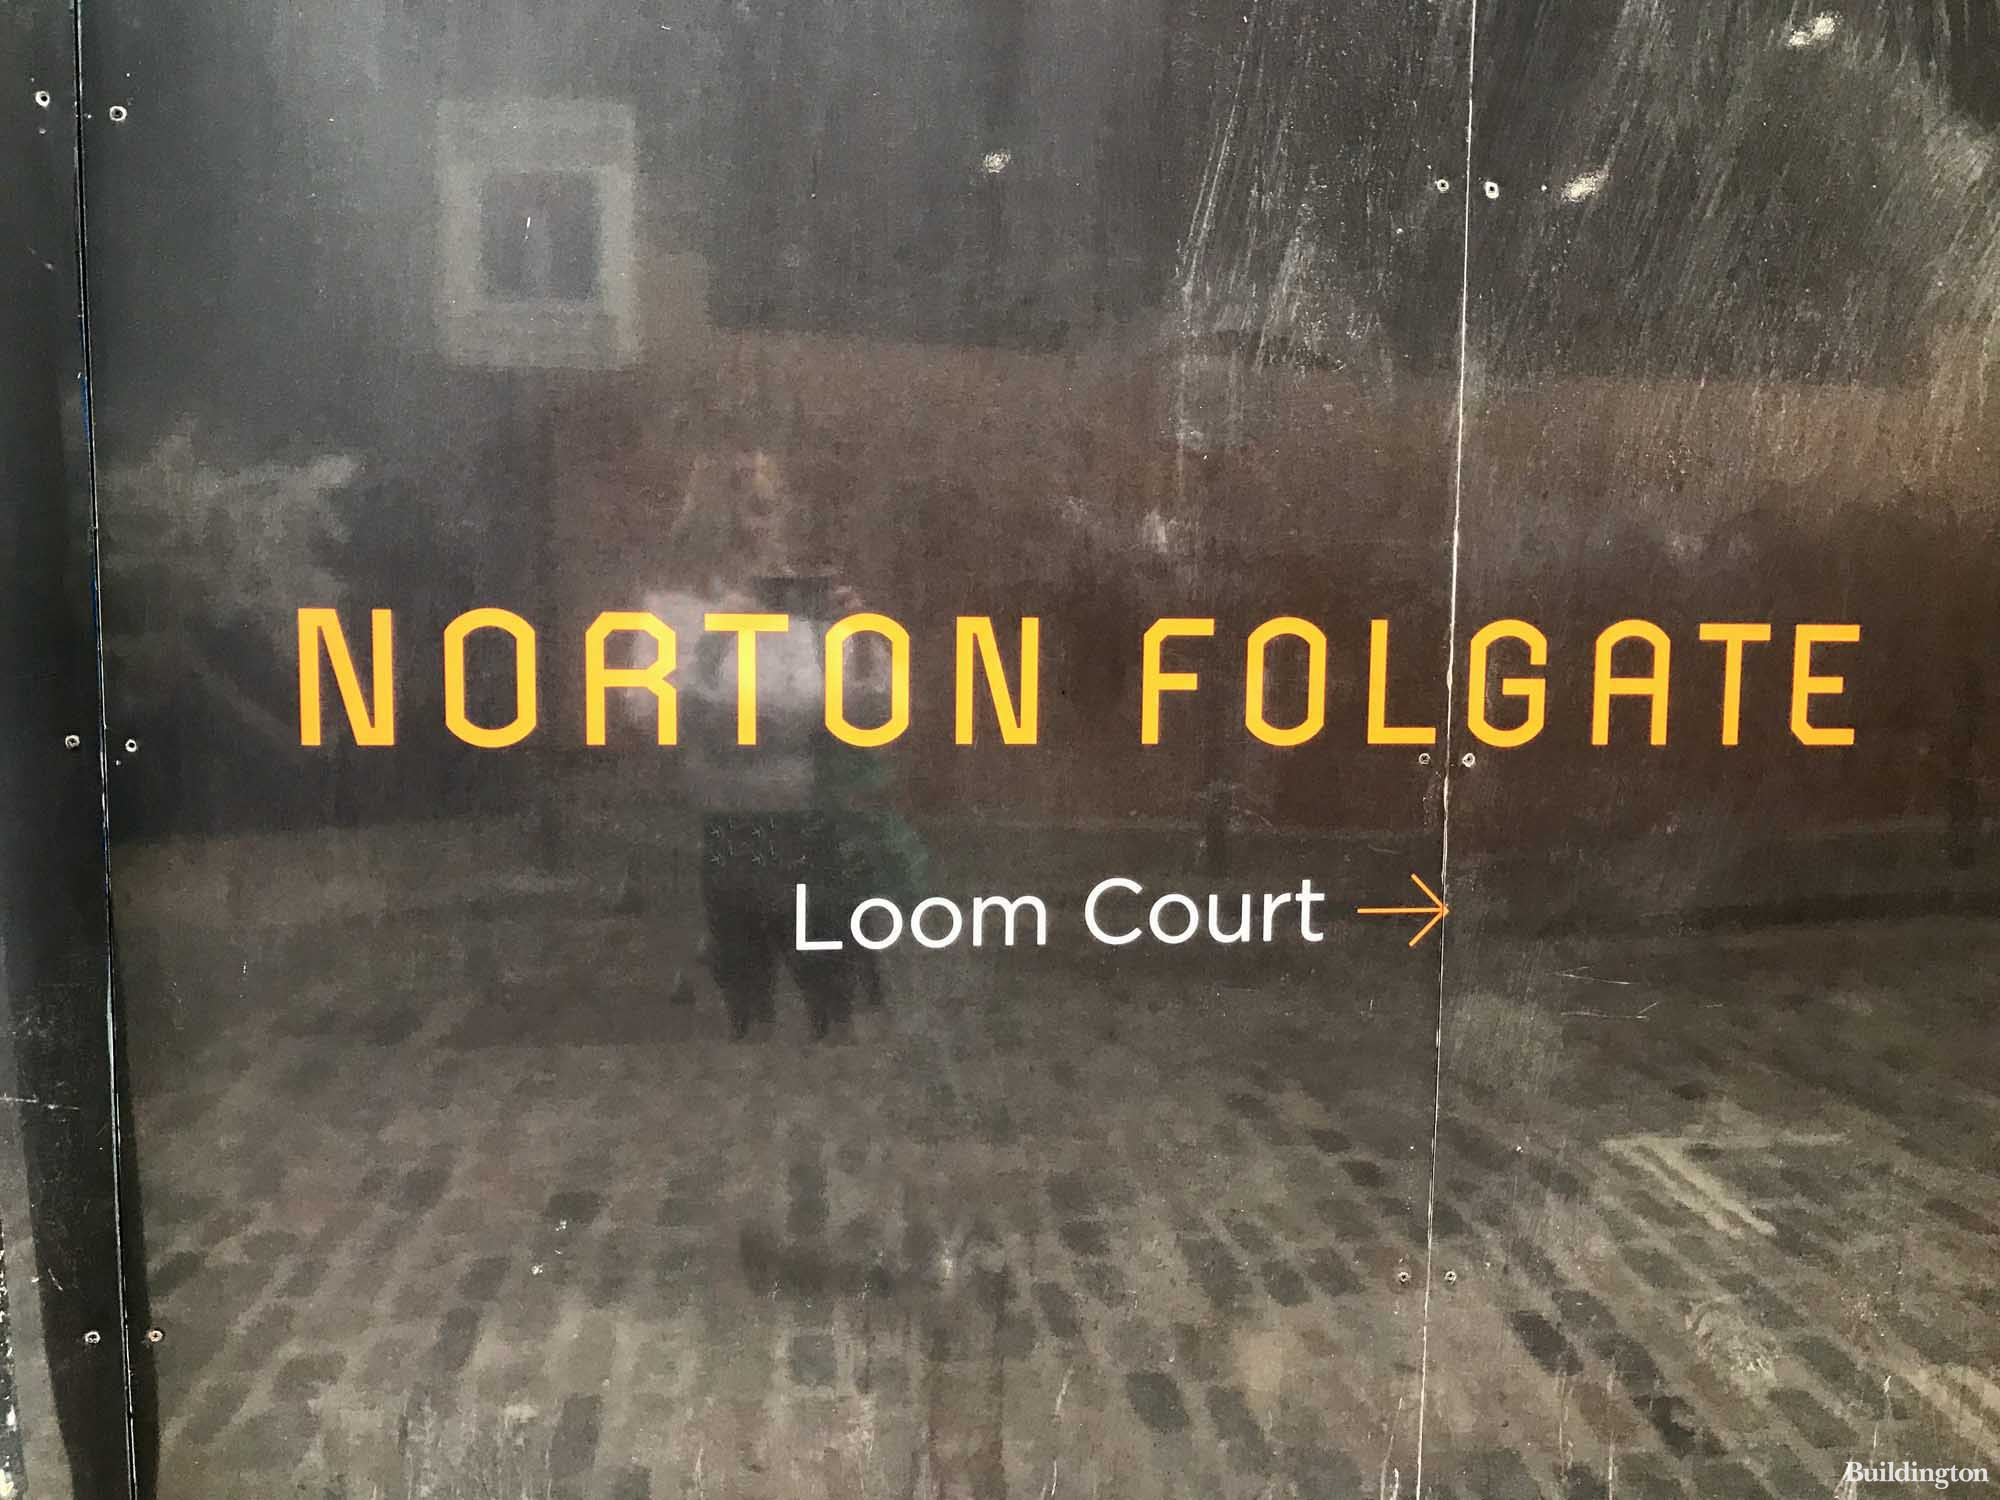 Loom Court at Norton Folgate development hoarding in Spitalfields, London E1